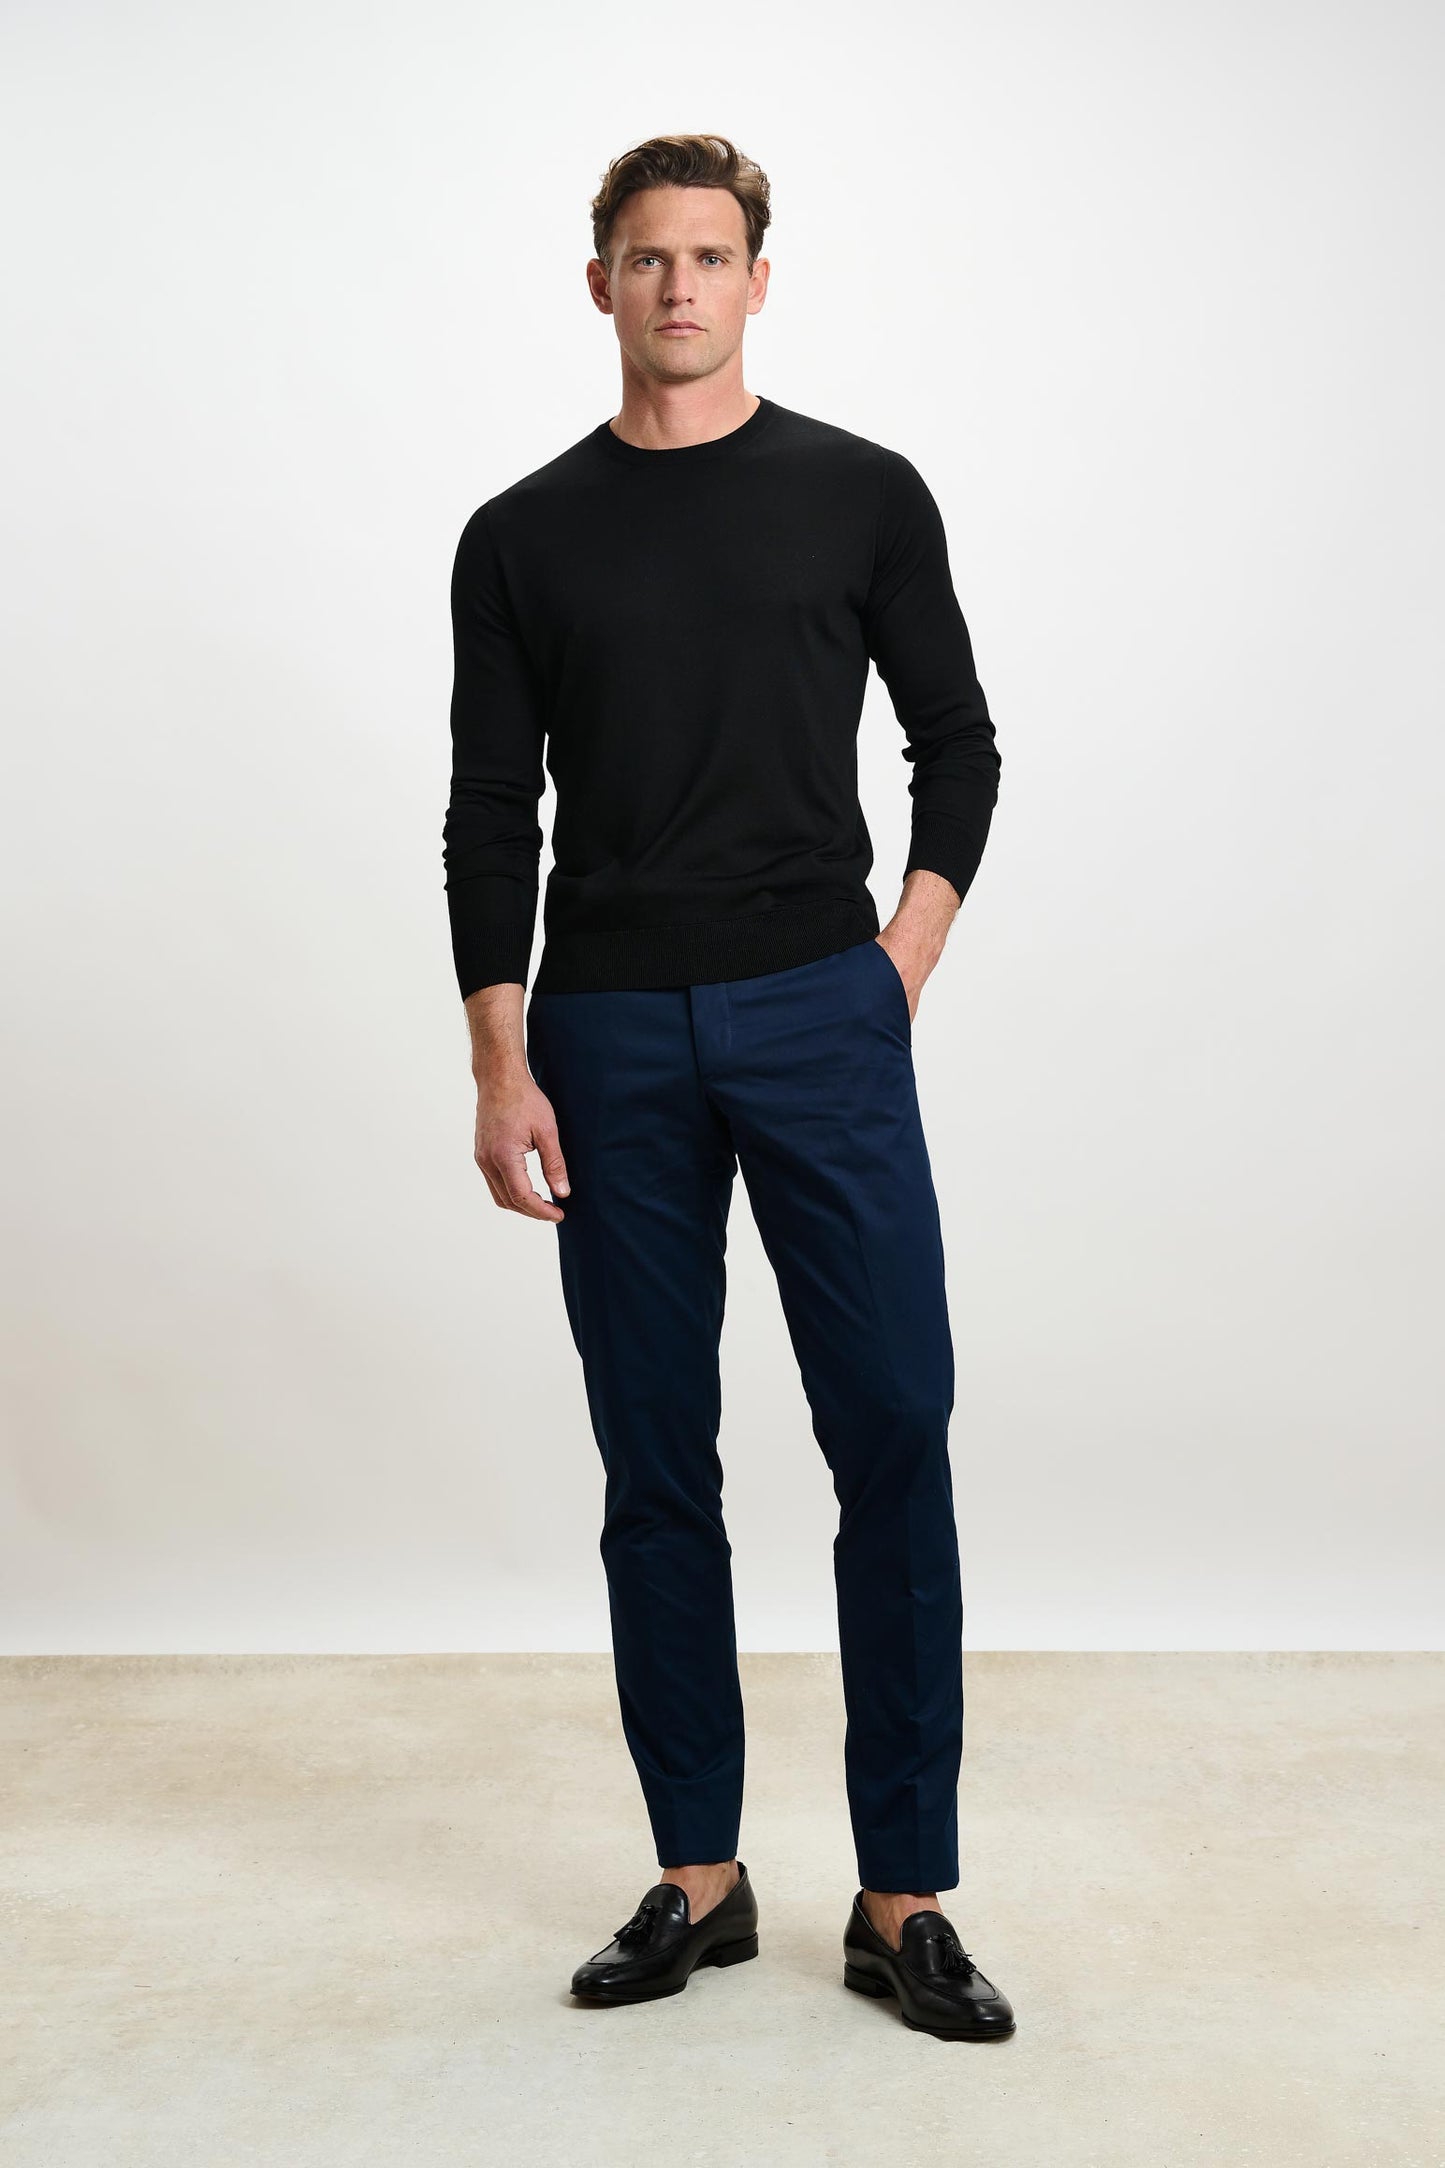 Crewe Silk Long Sleeve Sweater Black